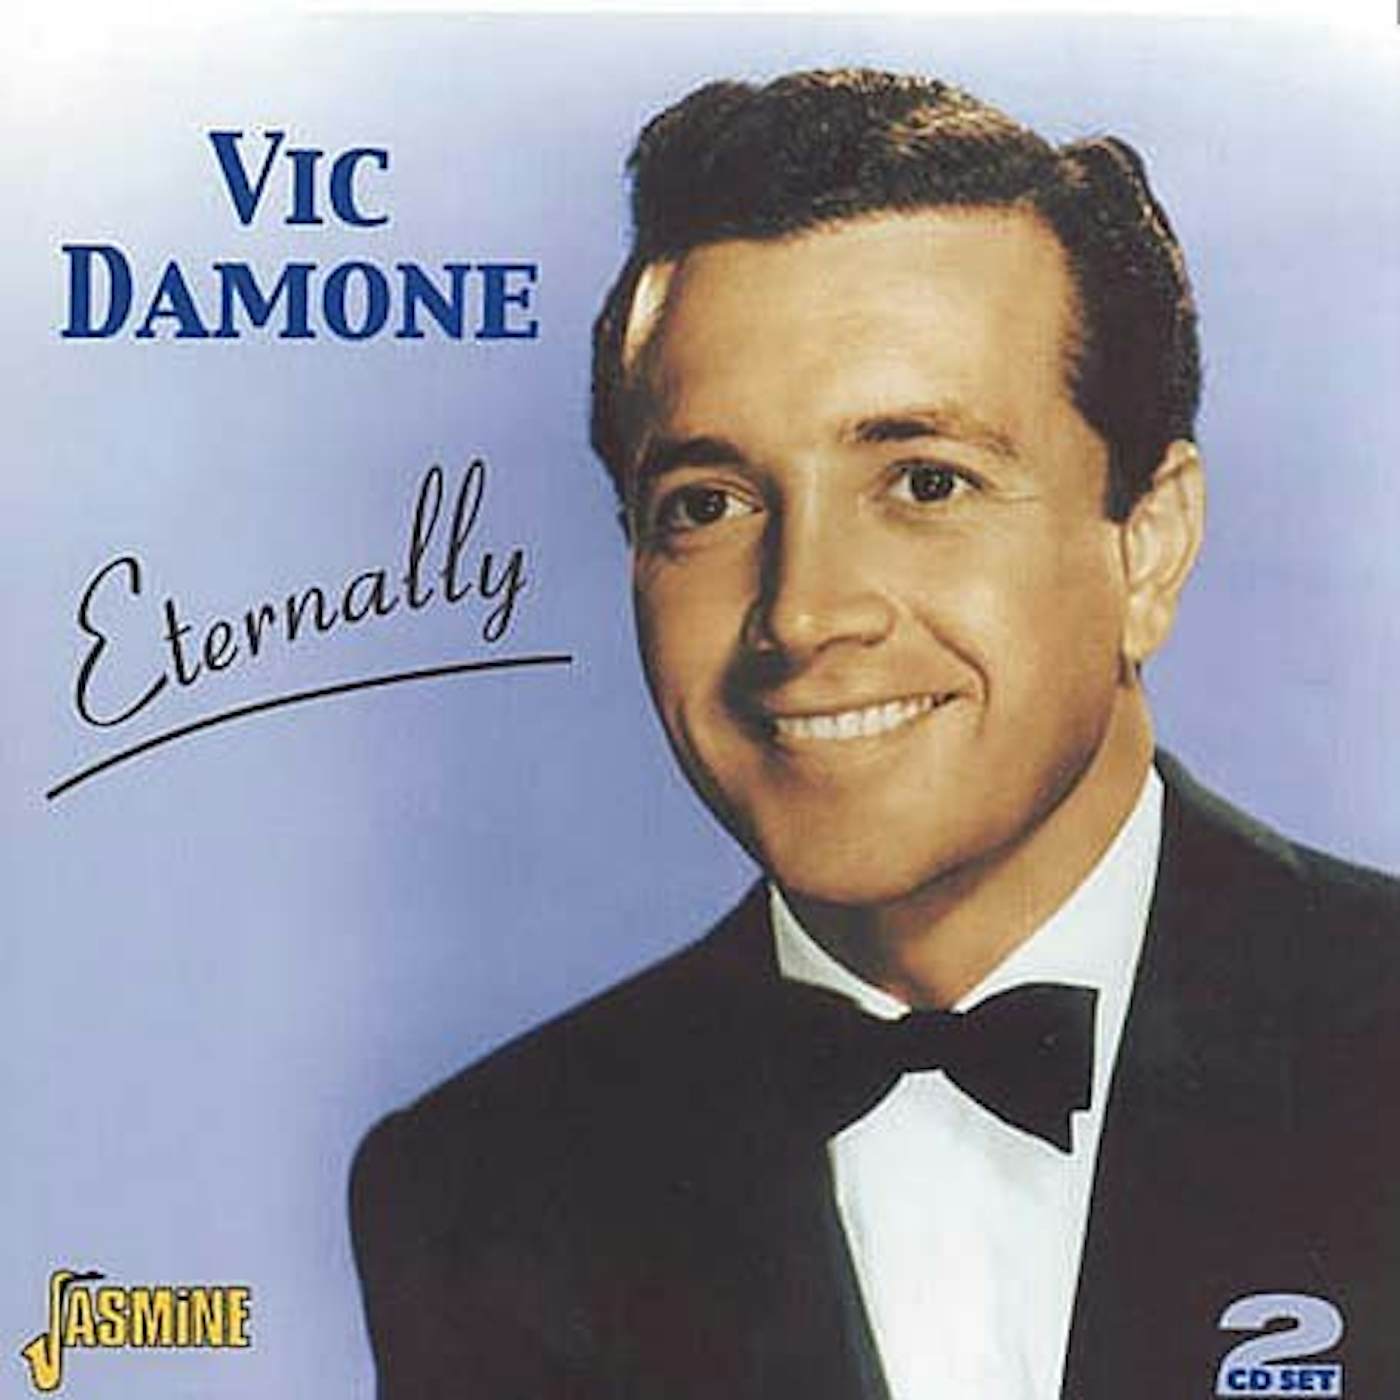 Vic Damone ETERNALLY CD